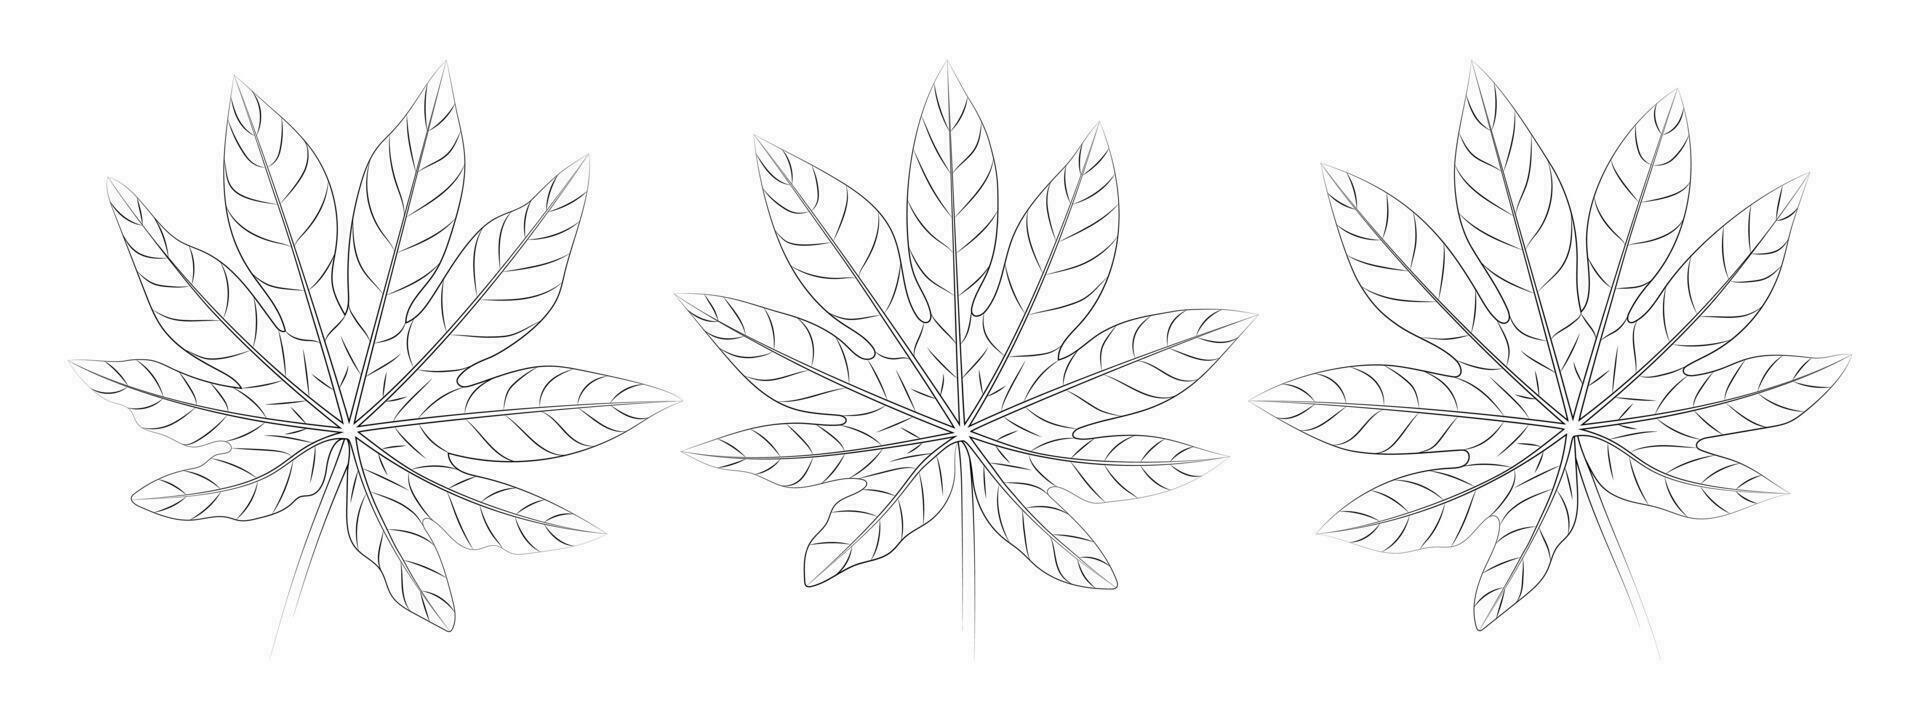 Aralia tropical leaves set. Vector botanical illustration, contour graphic drawing.